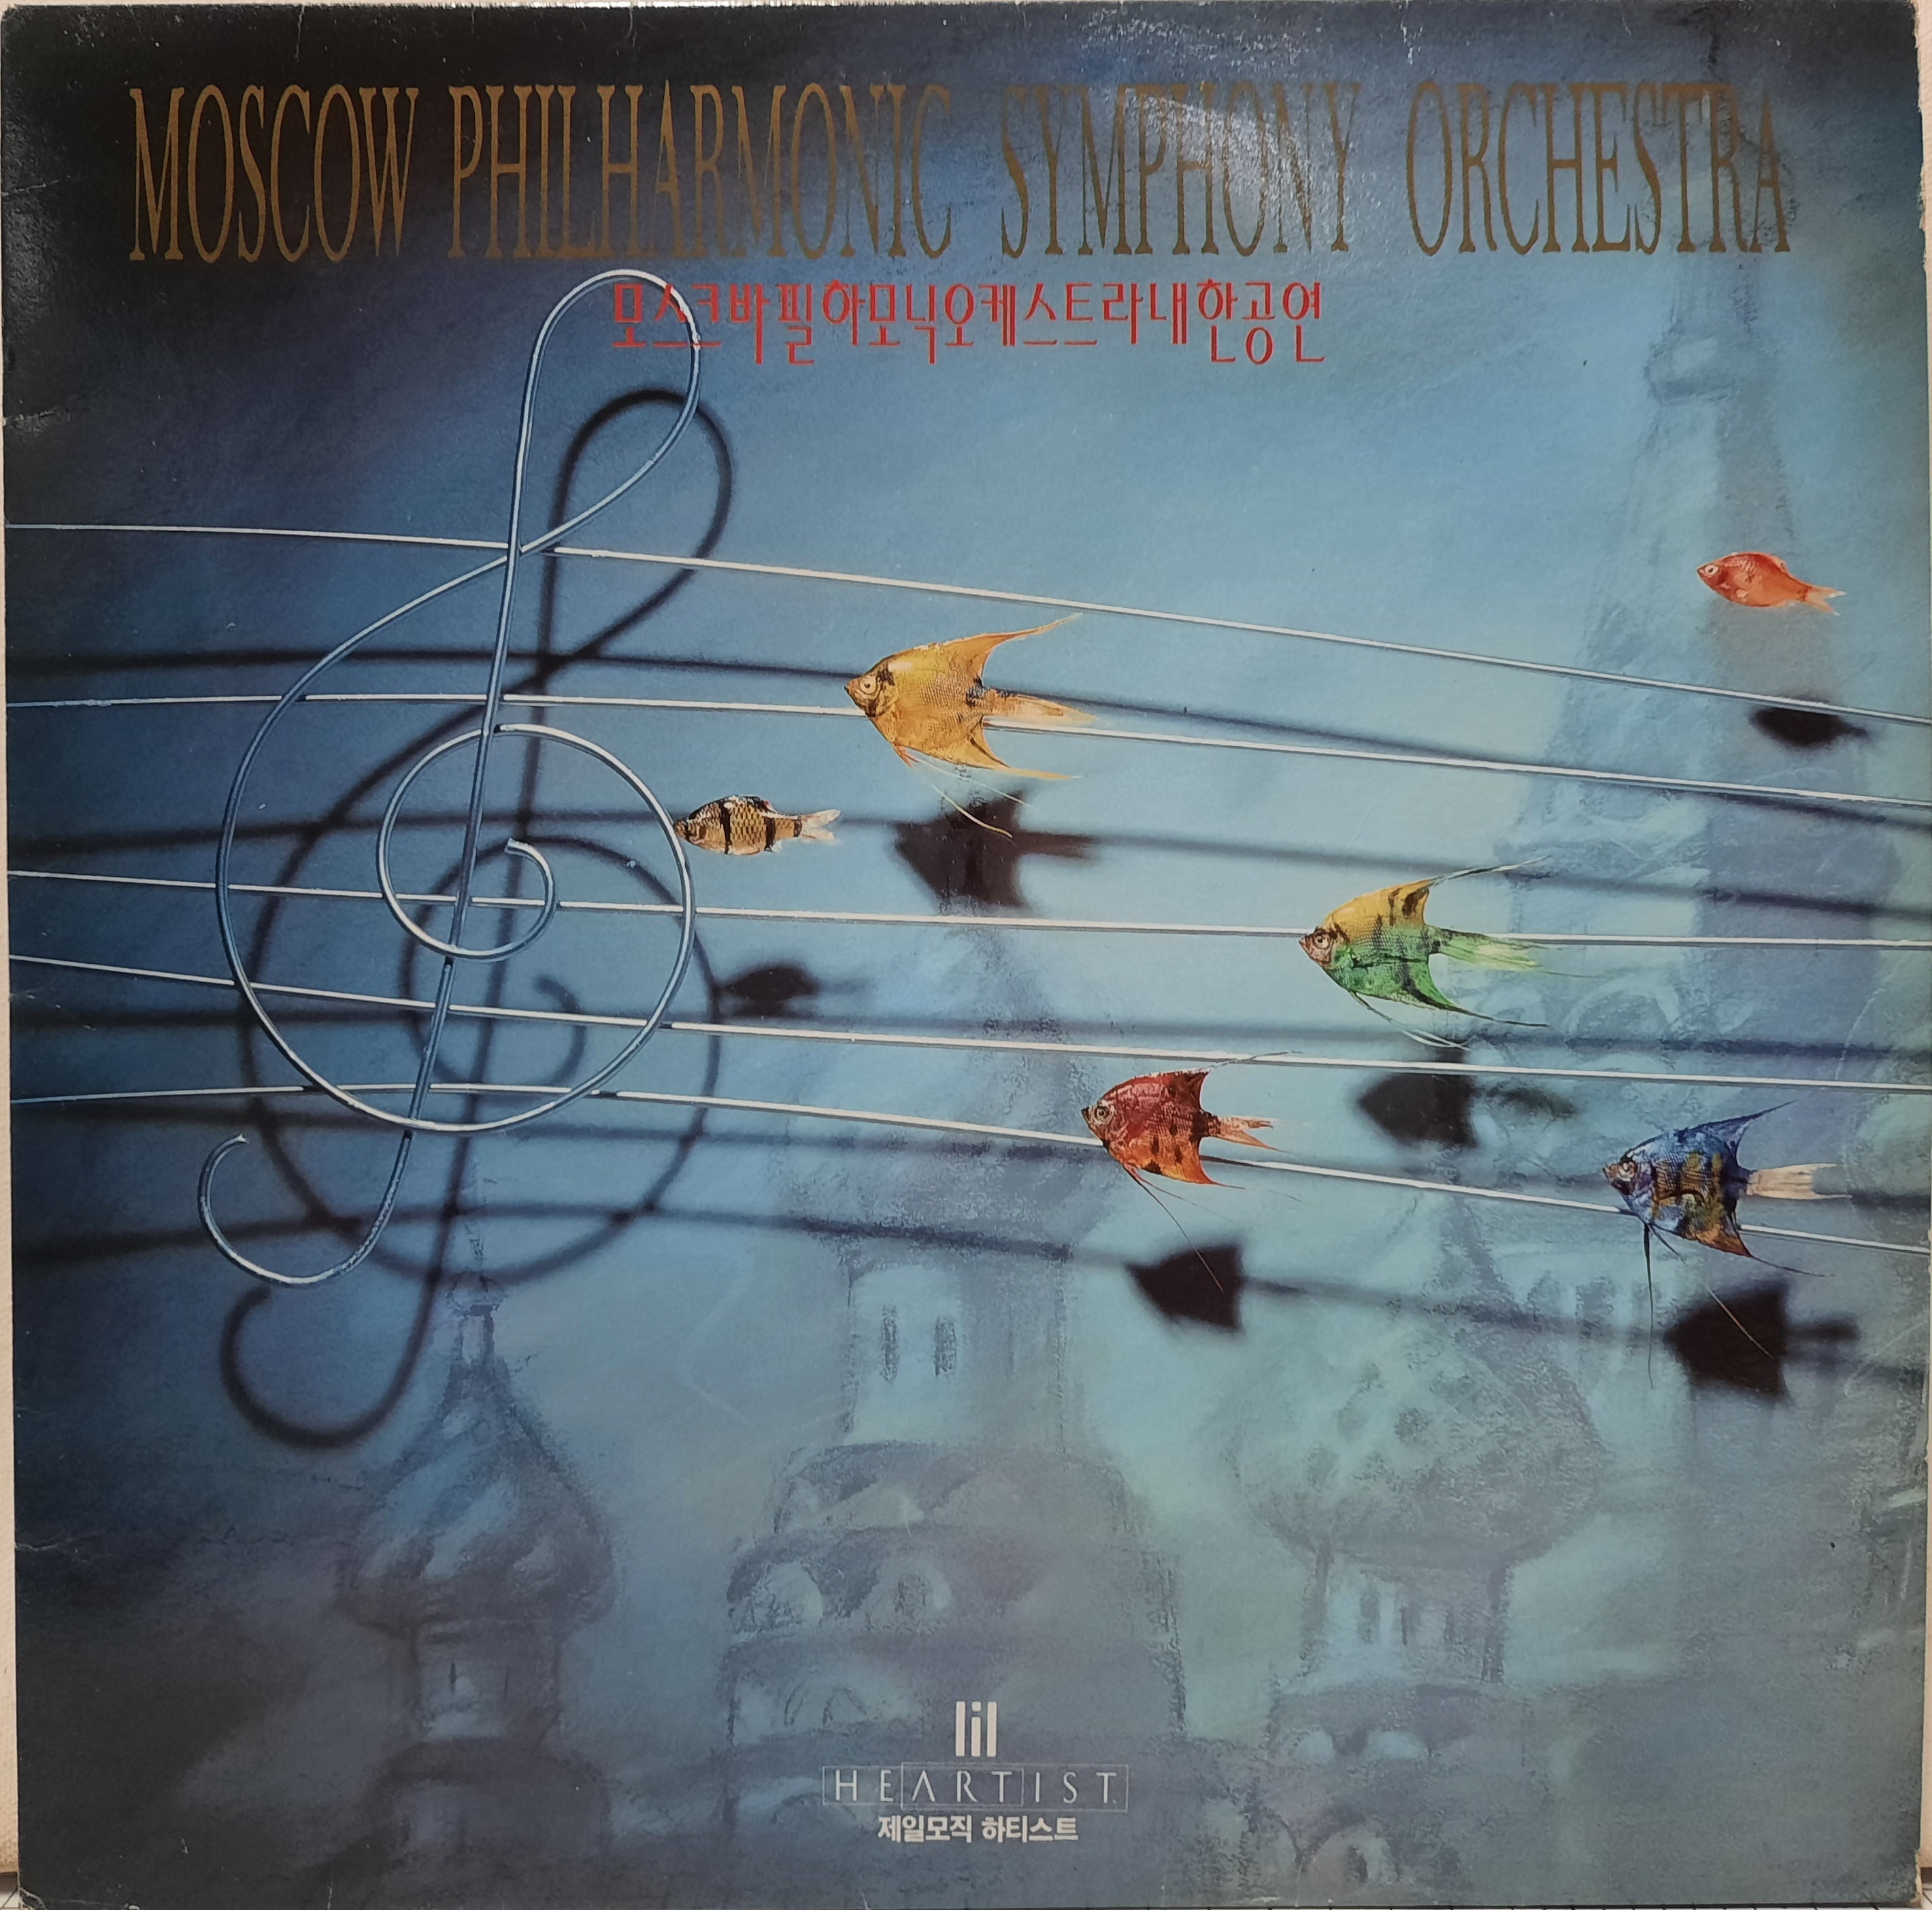 MOSCOW PHILHARMONIC SYMPHONY ORCHESTRA / 차이코프스키 바이올린협주곡 D장조, 작품 35